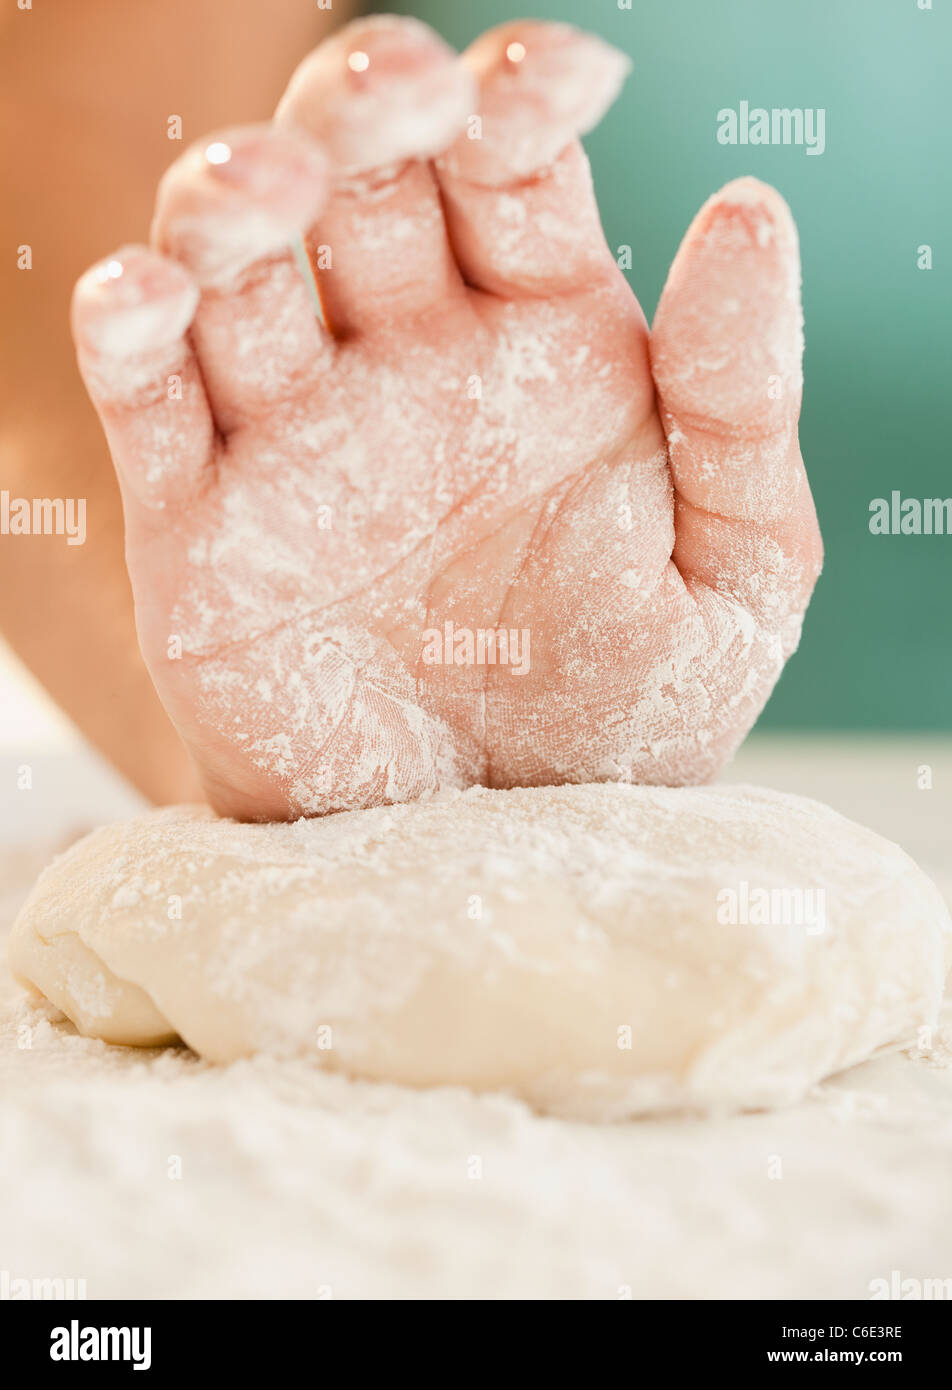 USA, New Jersey, Jersey City, Close up of woman's hand preparing dough Stock Photo